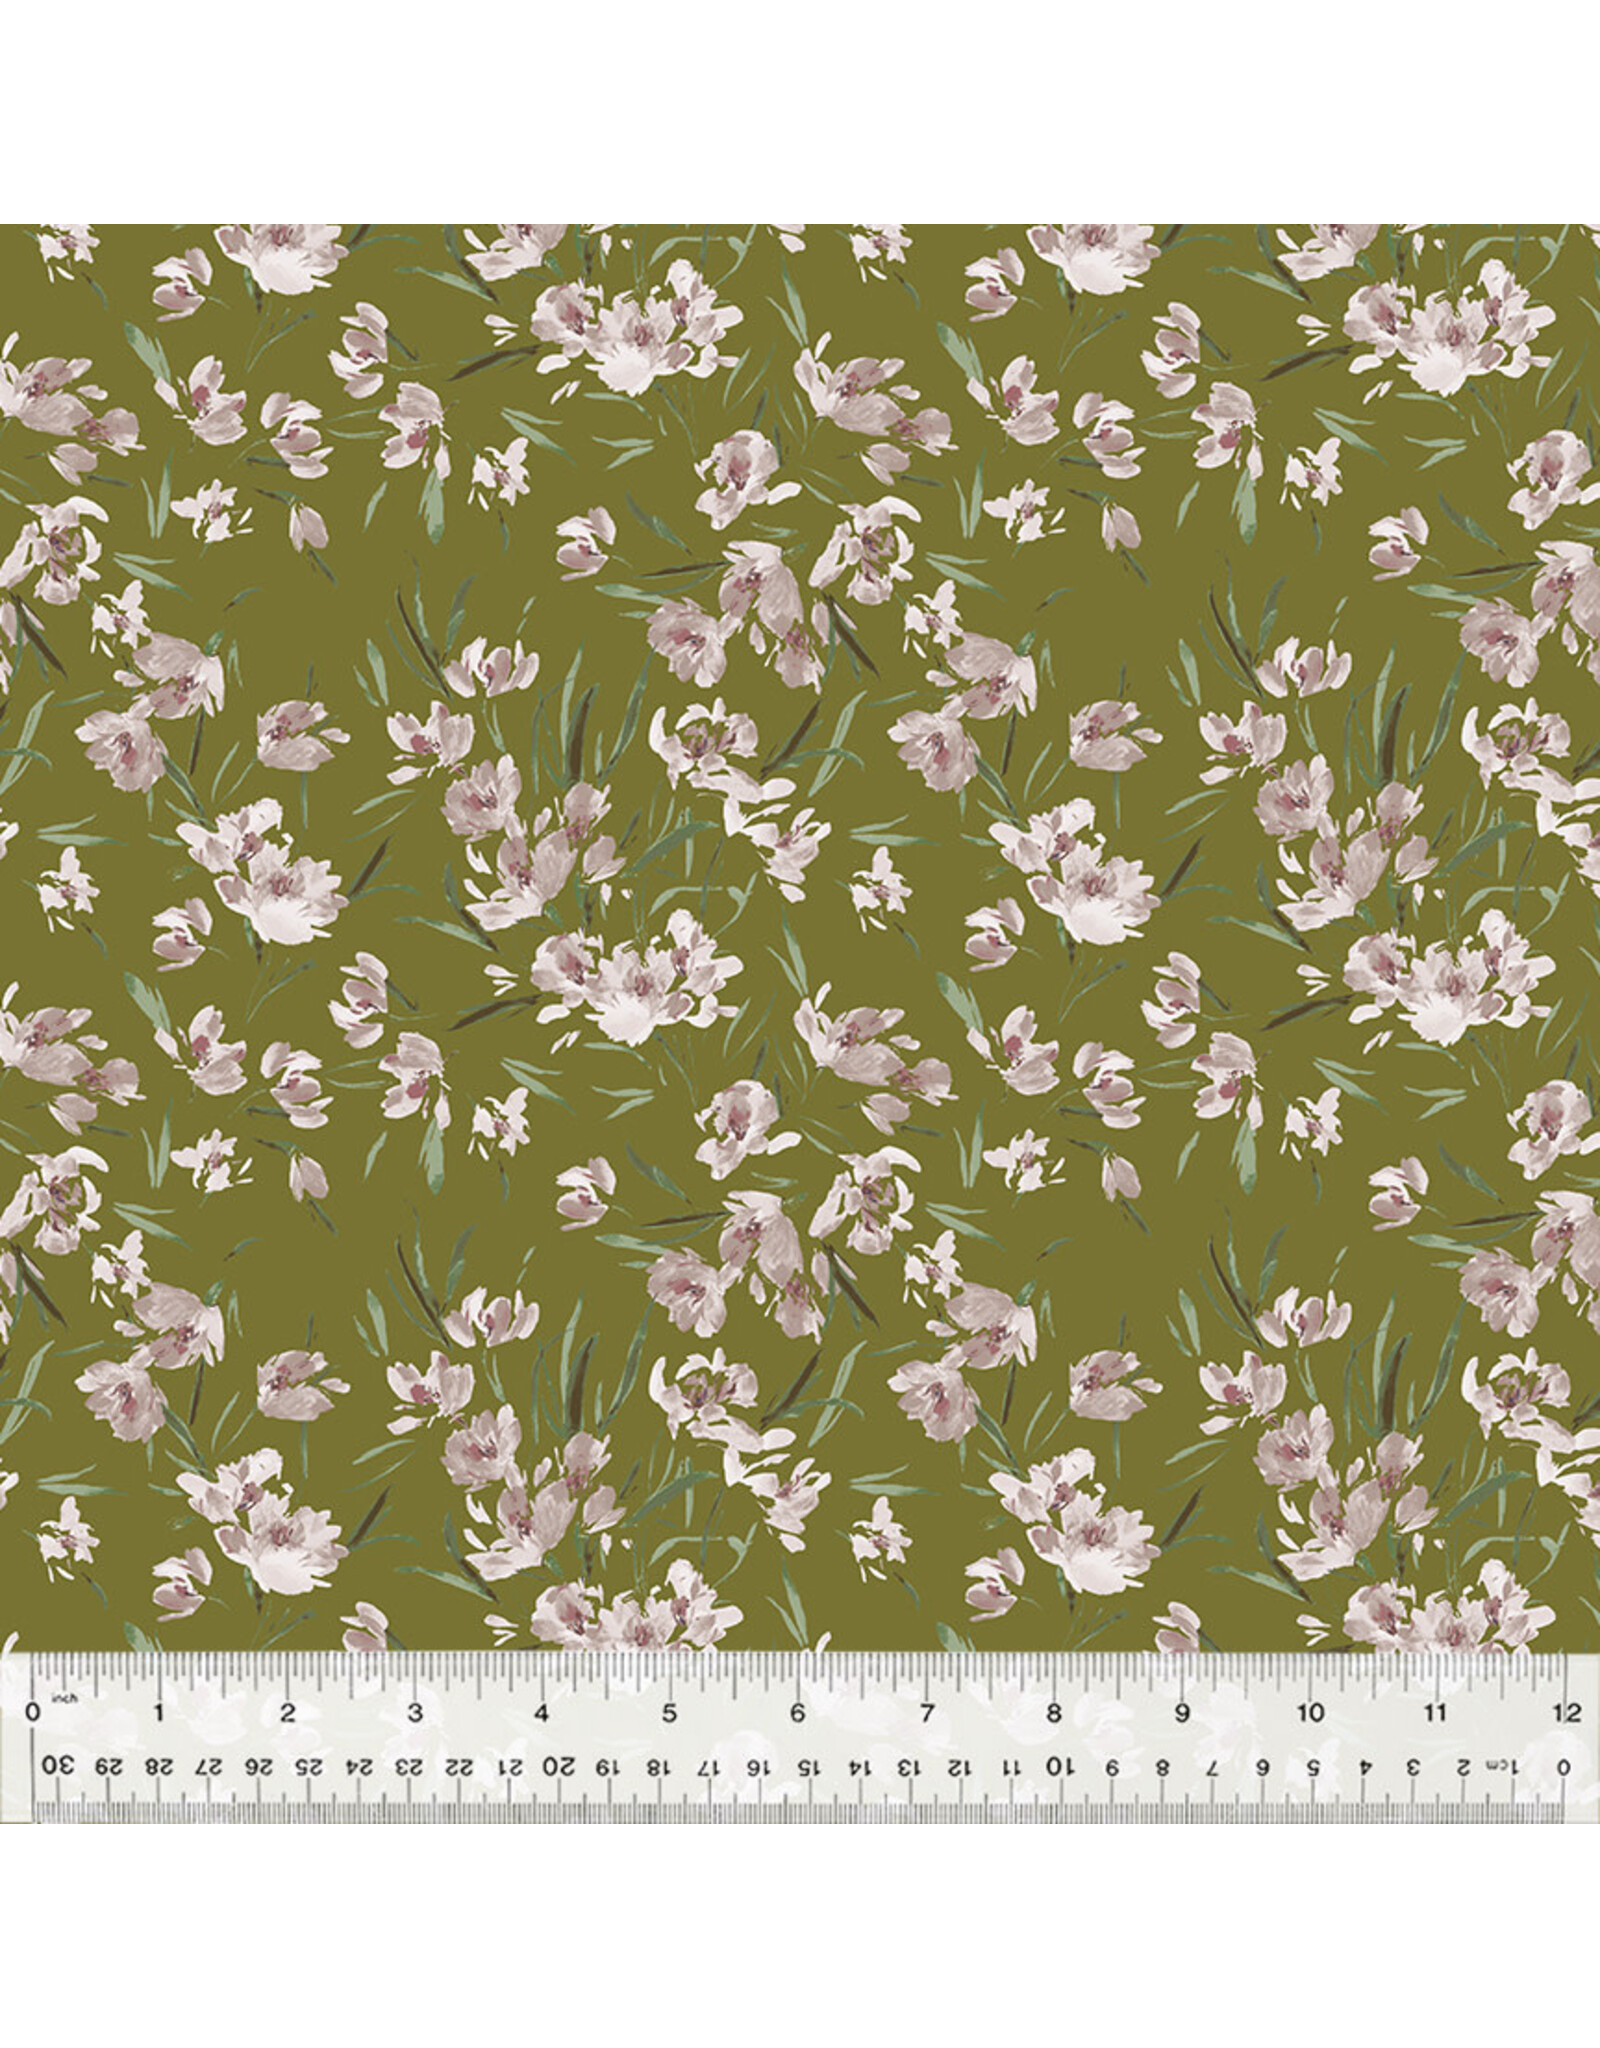 Kelly Ventura Perennial, Peony Tulip in Frond, Fabric Half-Yards